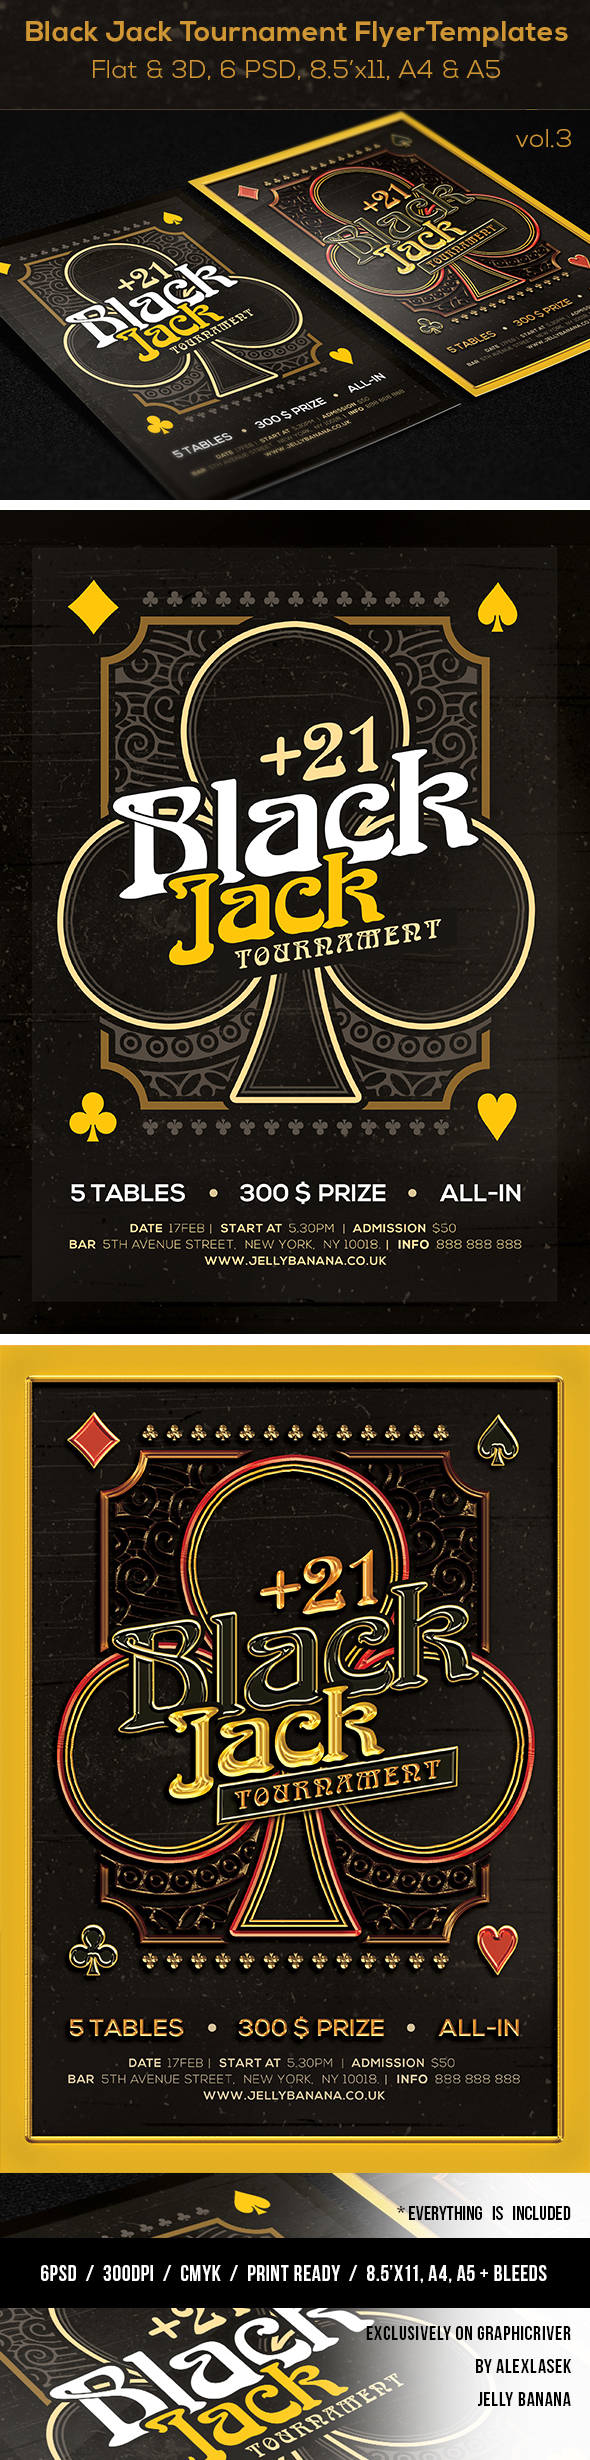 flyer template Poker Black Jack 3D flat Magazine Ad poster chips Tournament black gold